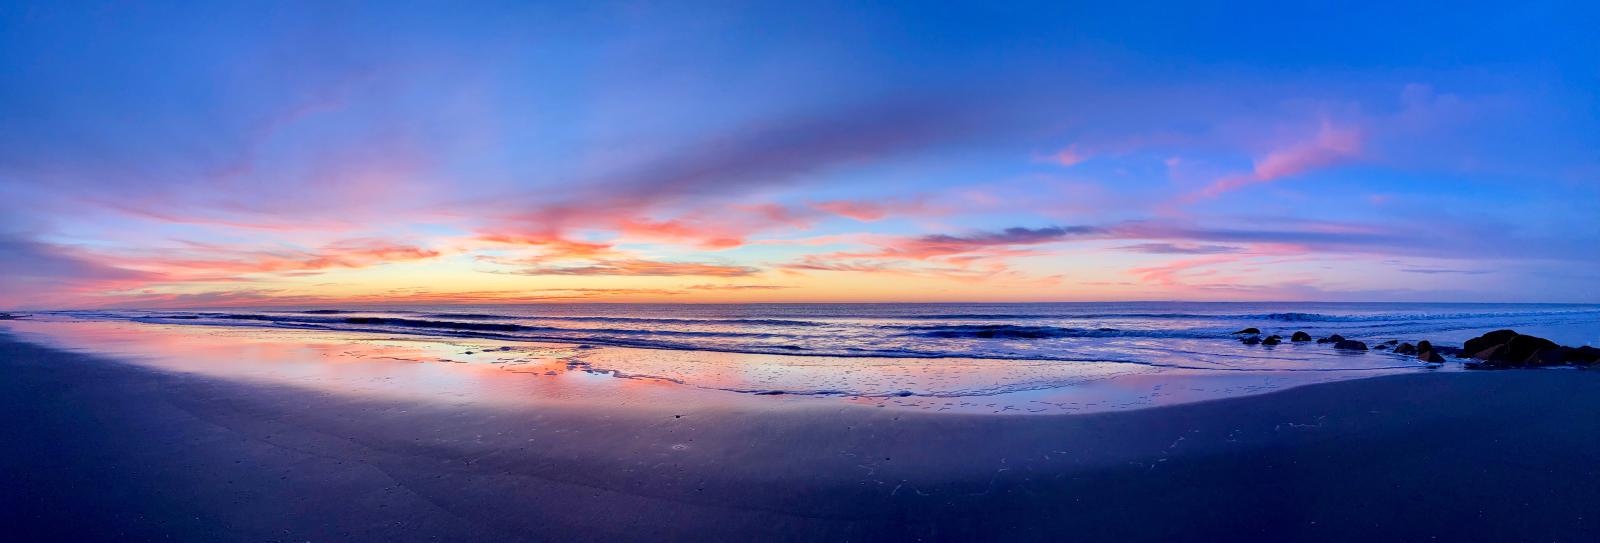 Dawn breaks in a swath of purple, orange, and blue over a sandy beach